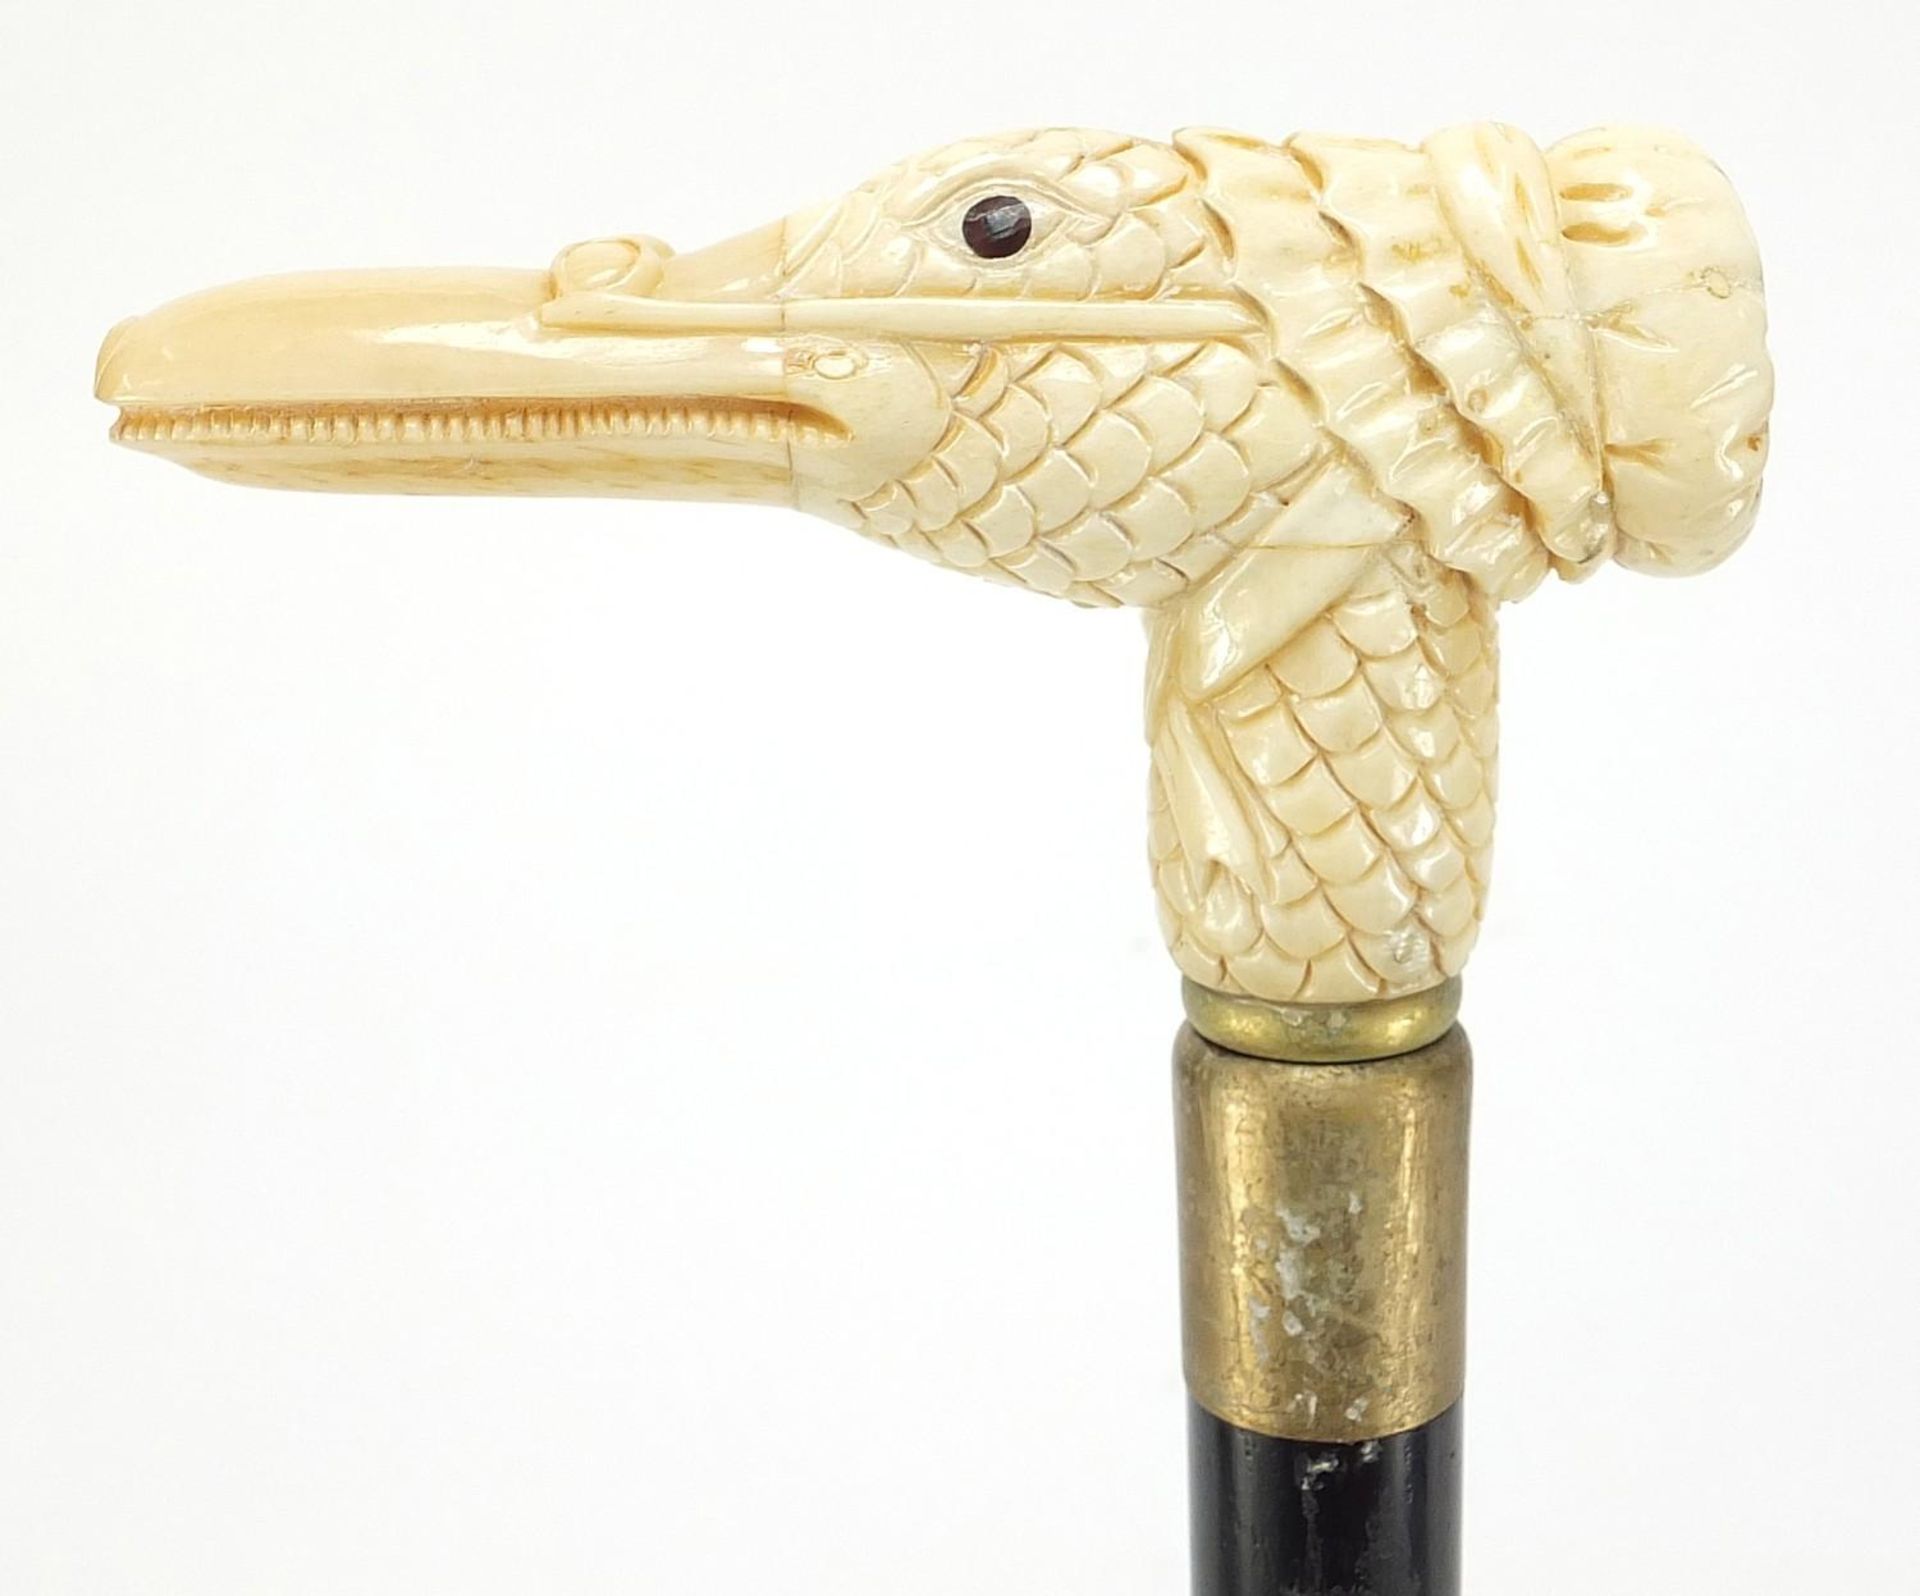 Hardwood walking stick with carved bone duck design handle, 91.5cm in length : - Image 4 of 6